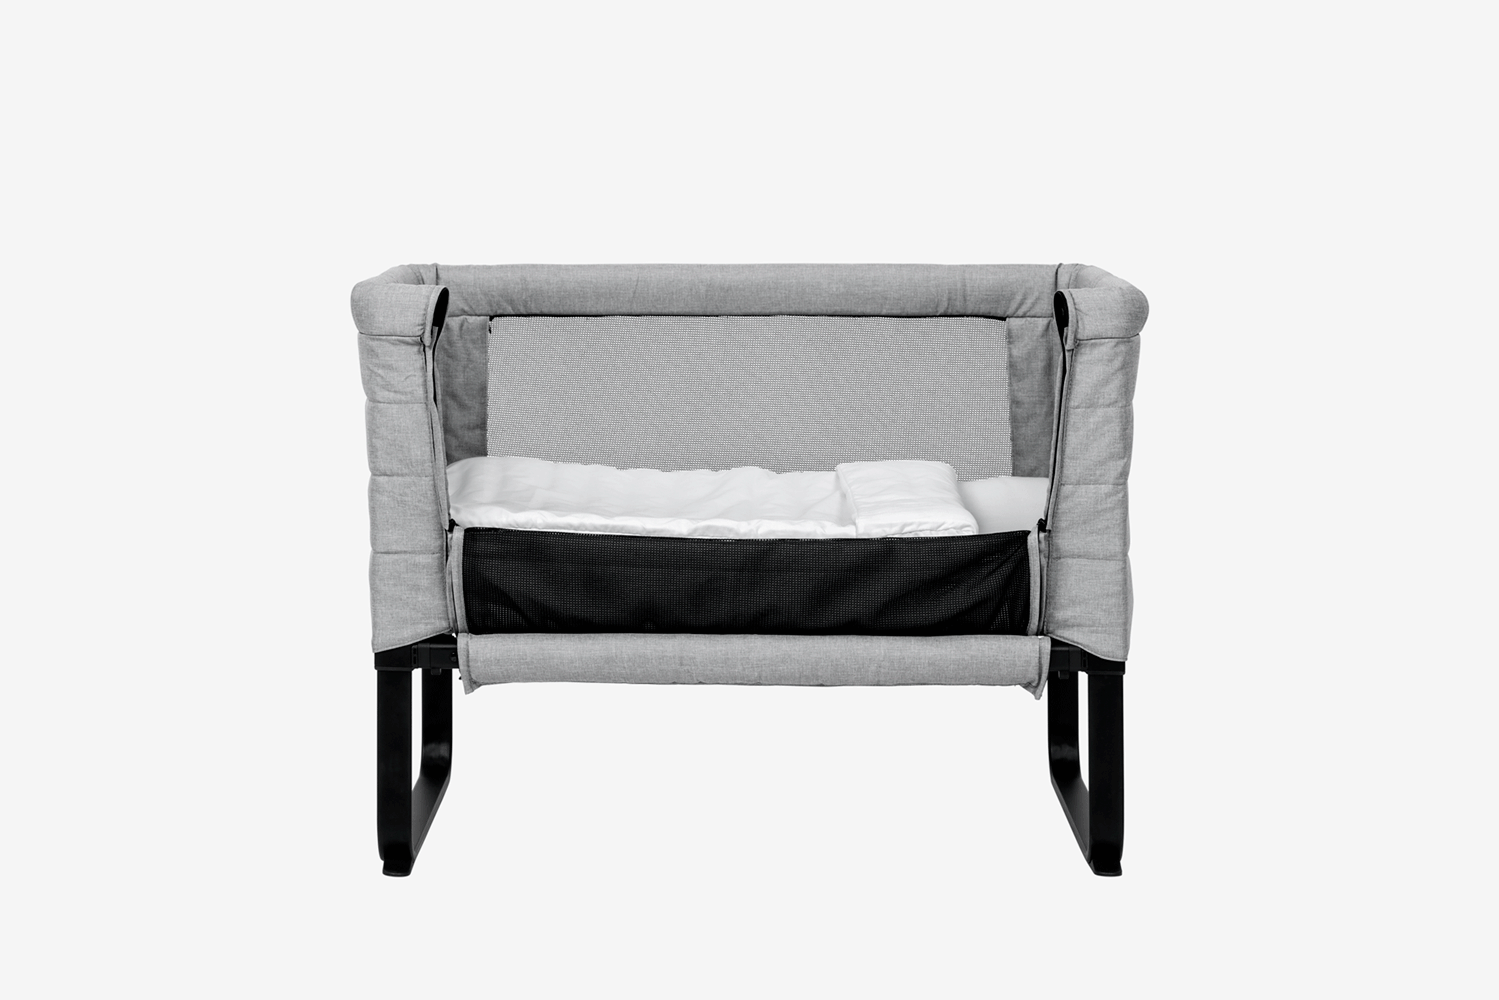 Bedside Cradle + Extension Kit - FROM